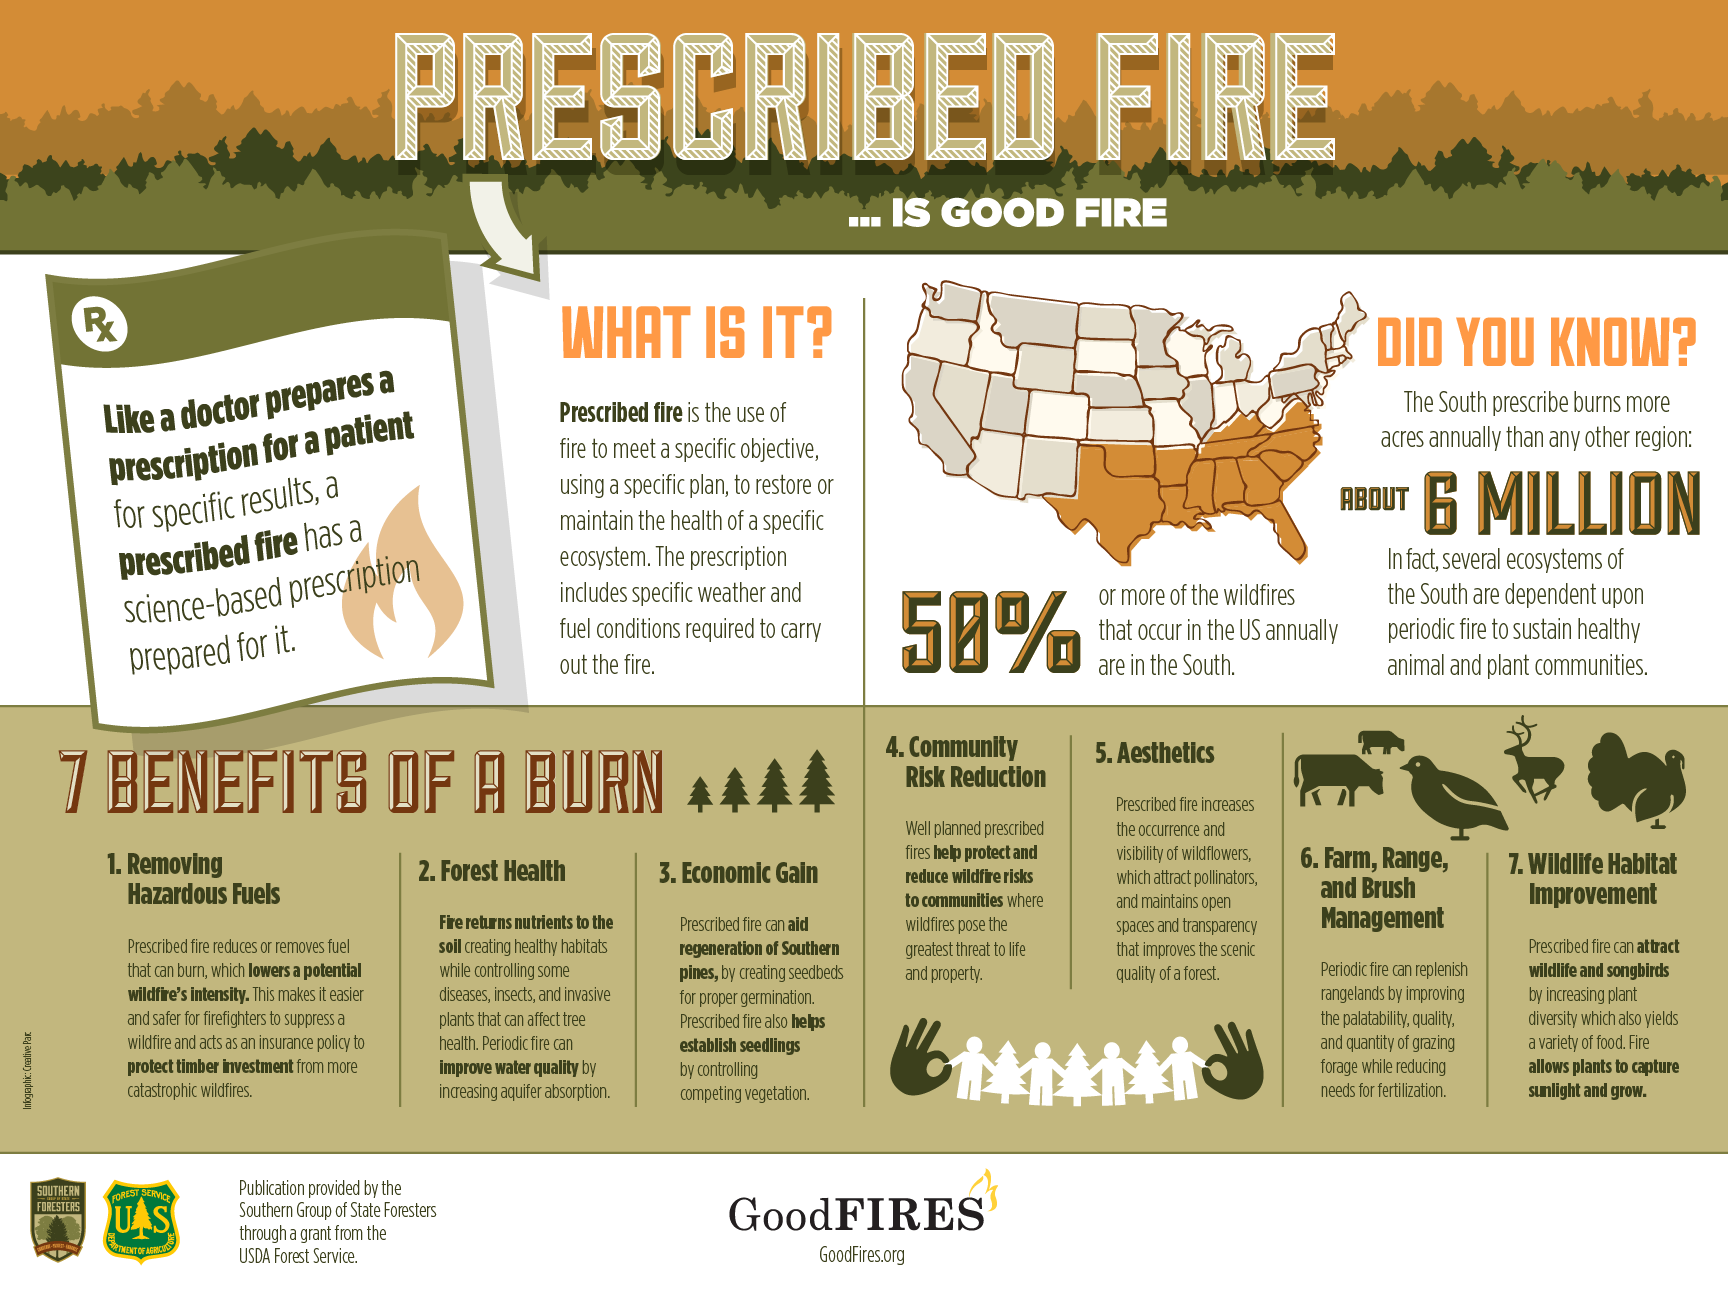 Prescribed fire is good fire